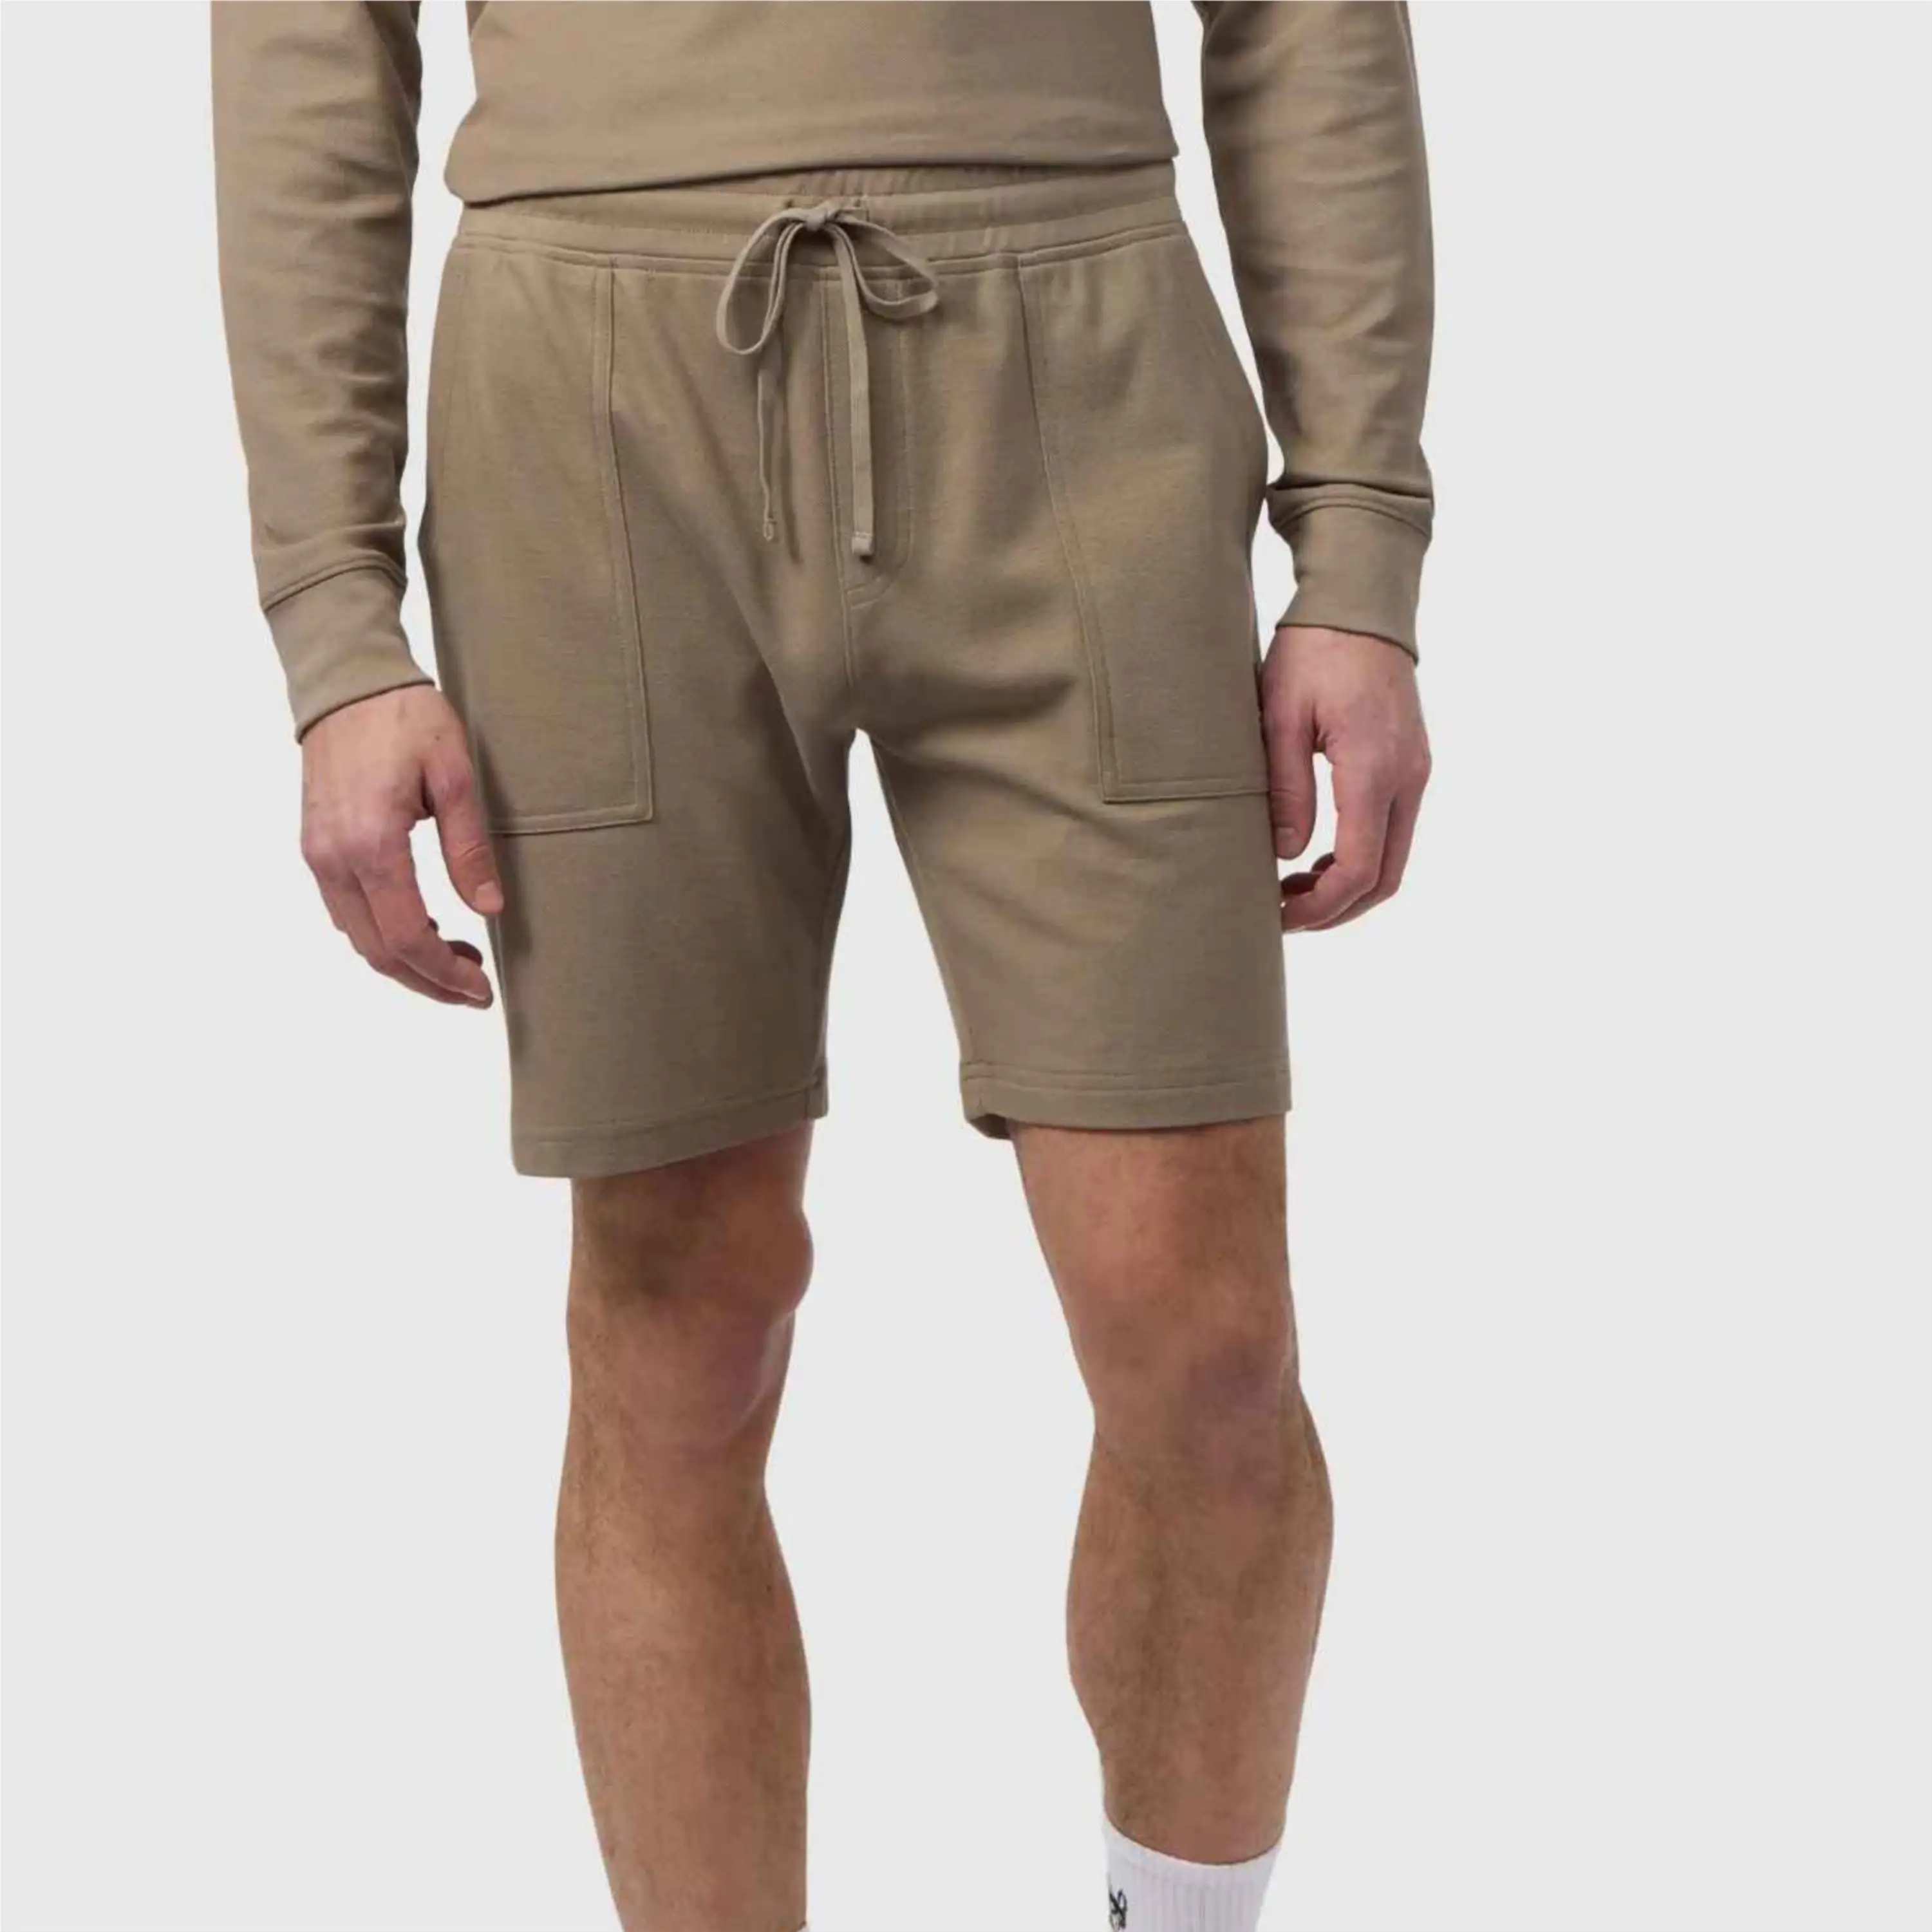 New Sale Sportswear Men Cotton Casual Fleece Jogger Shorts Zipper Pockets Athletic Workout Gym Sweat Shorts